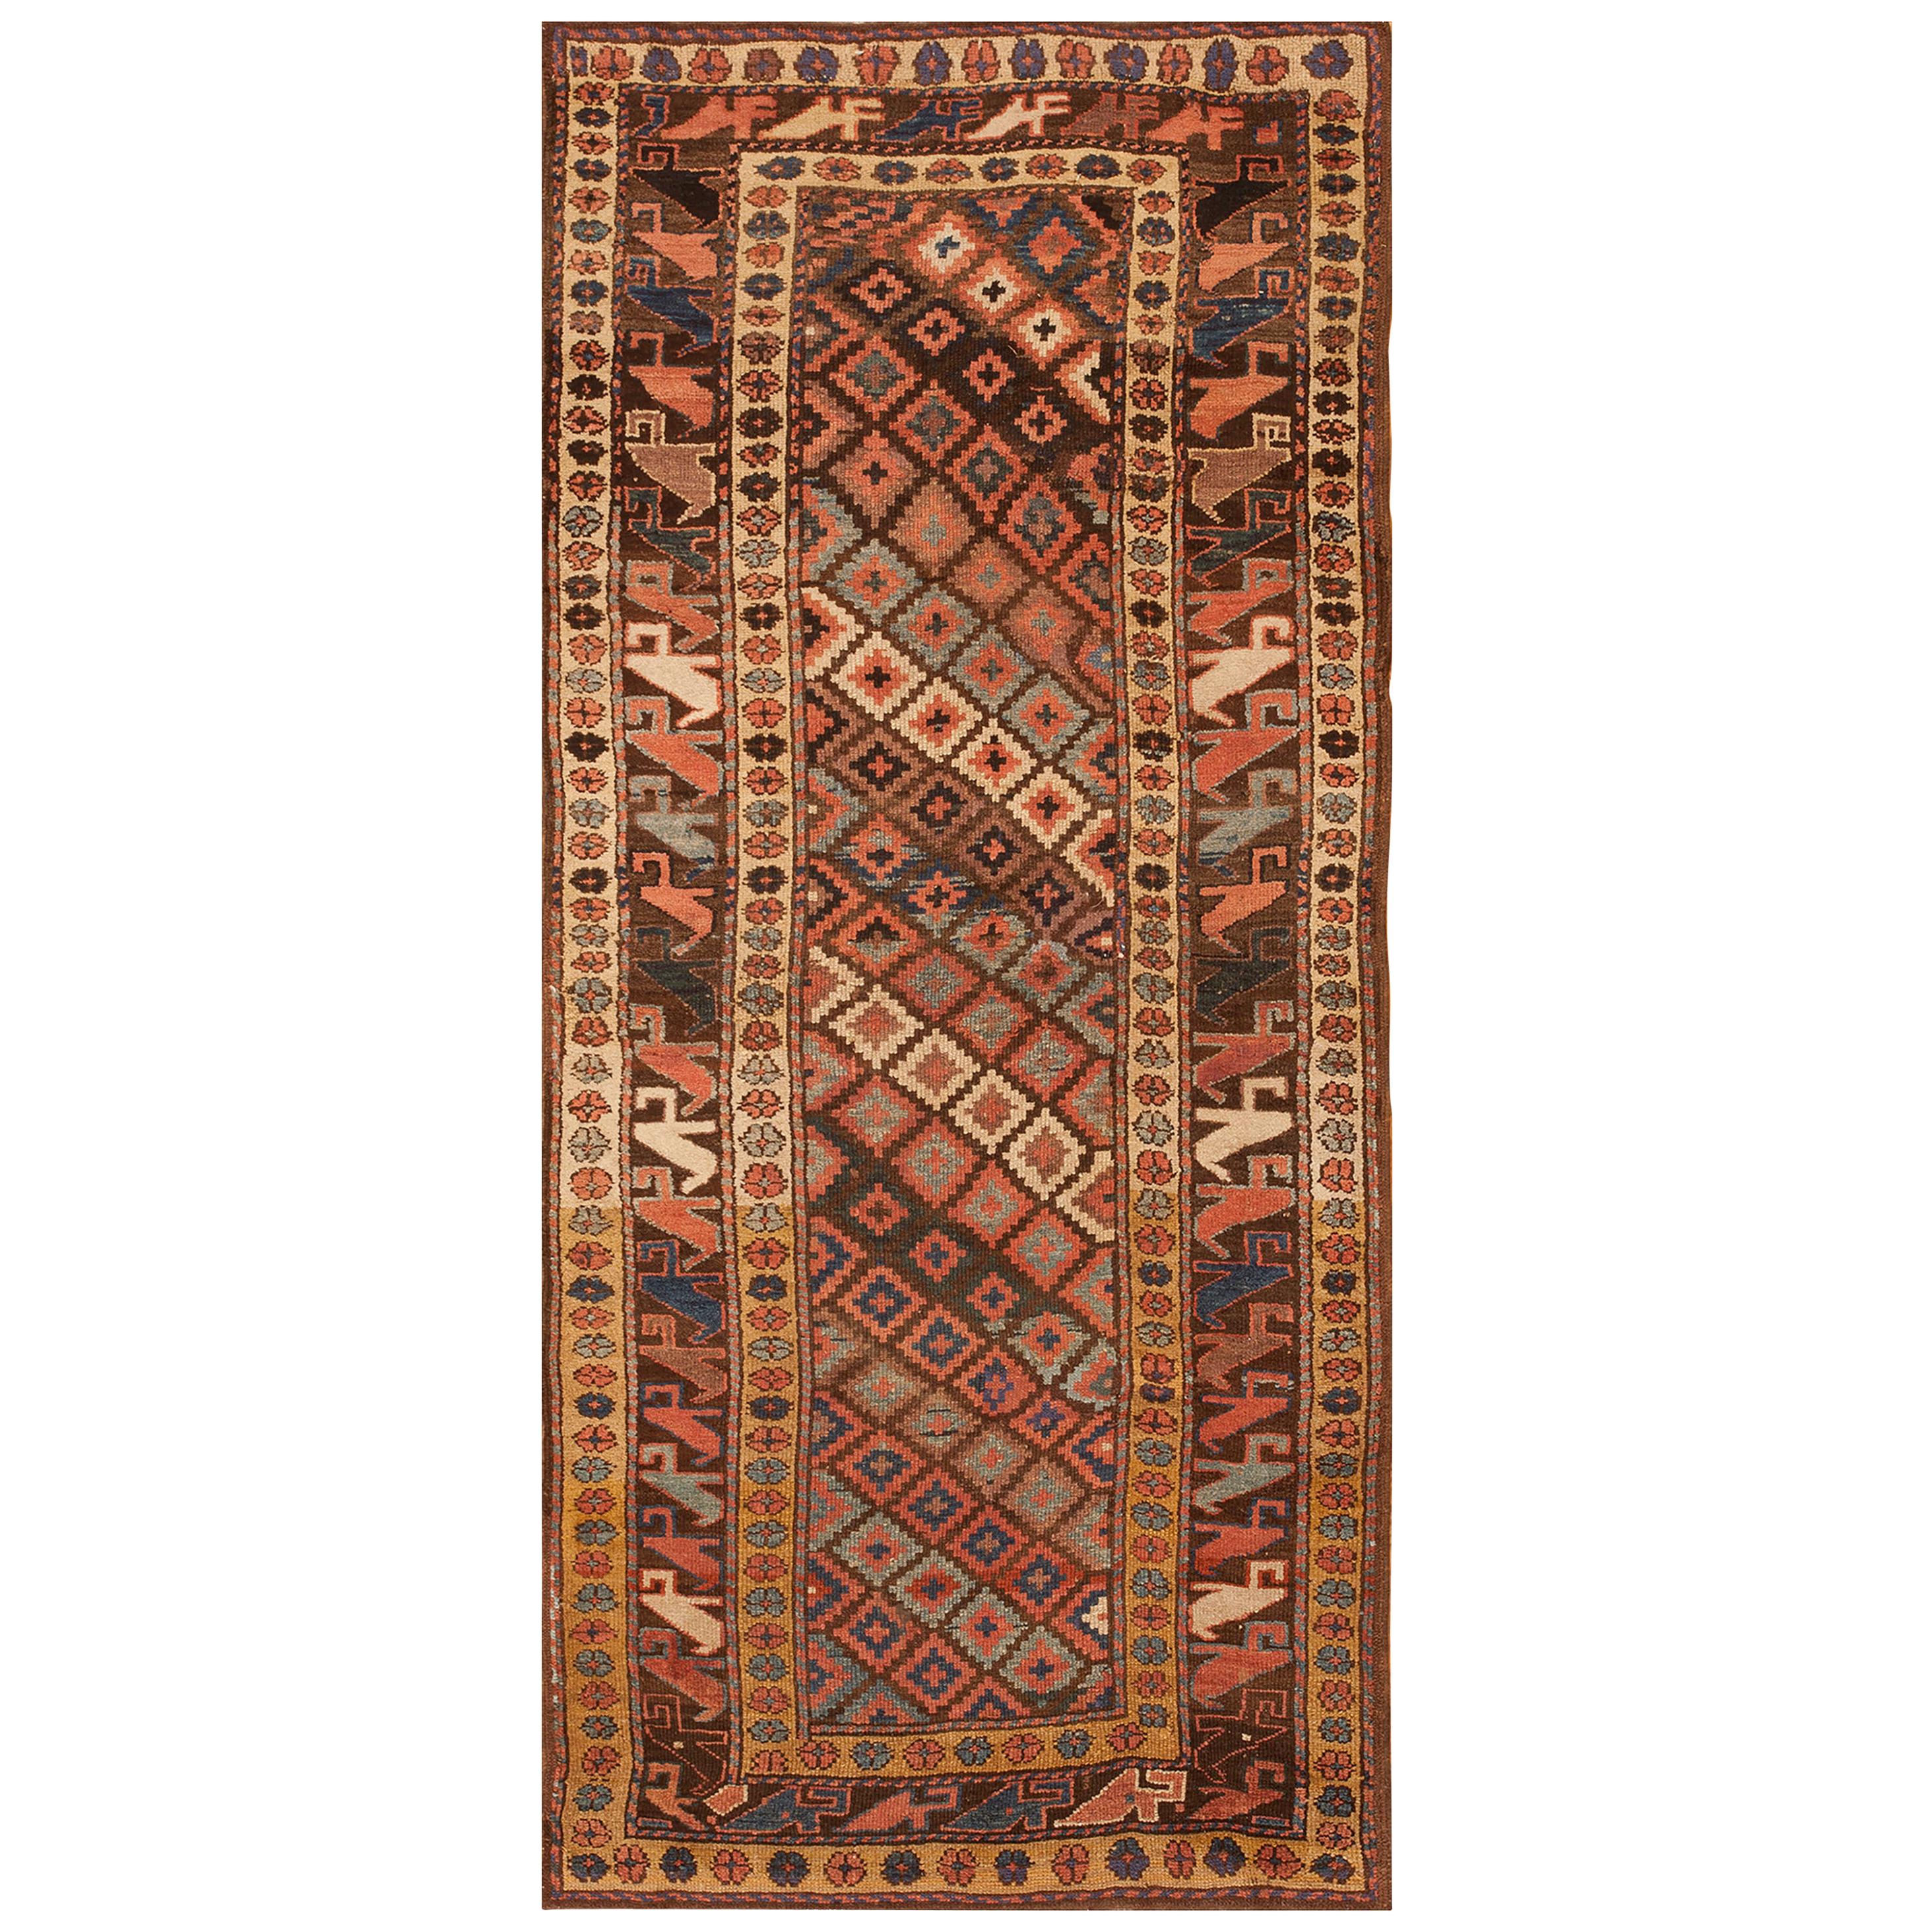 Early 20th Century W. Persian Kurdish Rug ( 3'4" x 6'9" - 102 x 206 ) For Sale